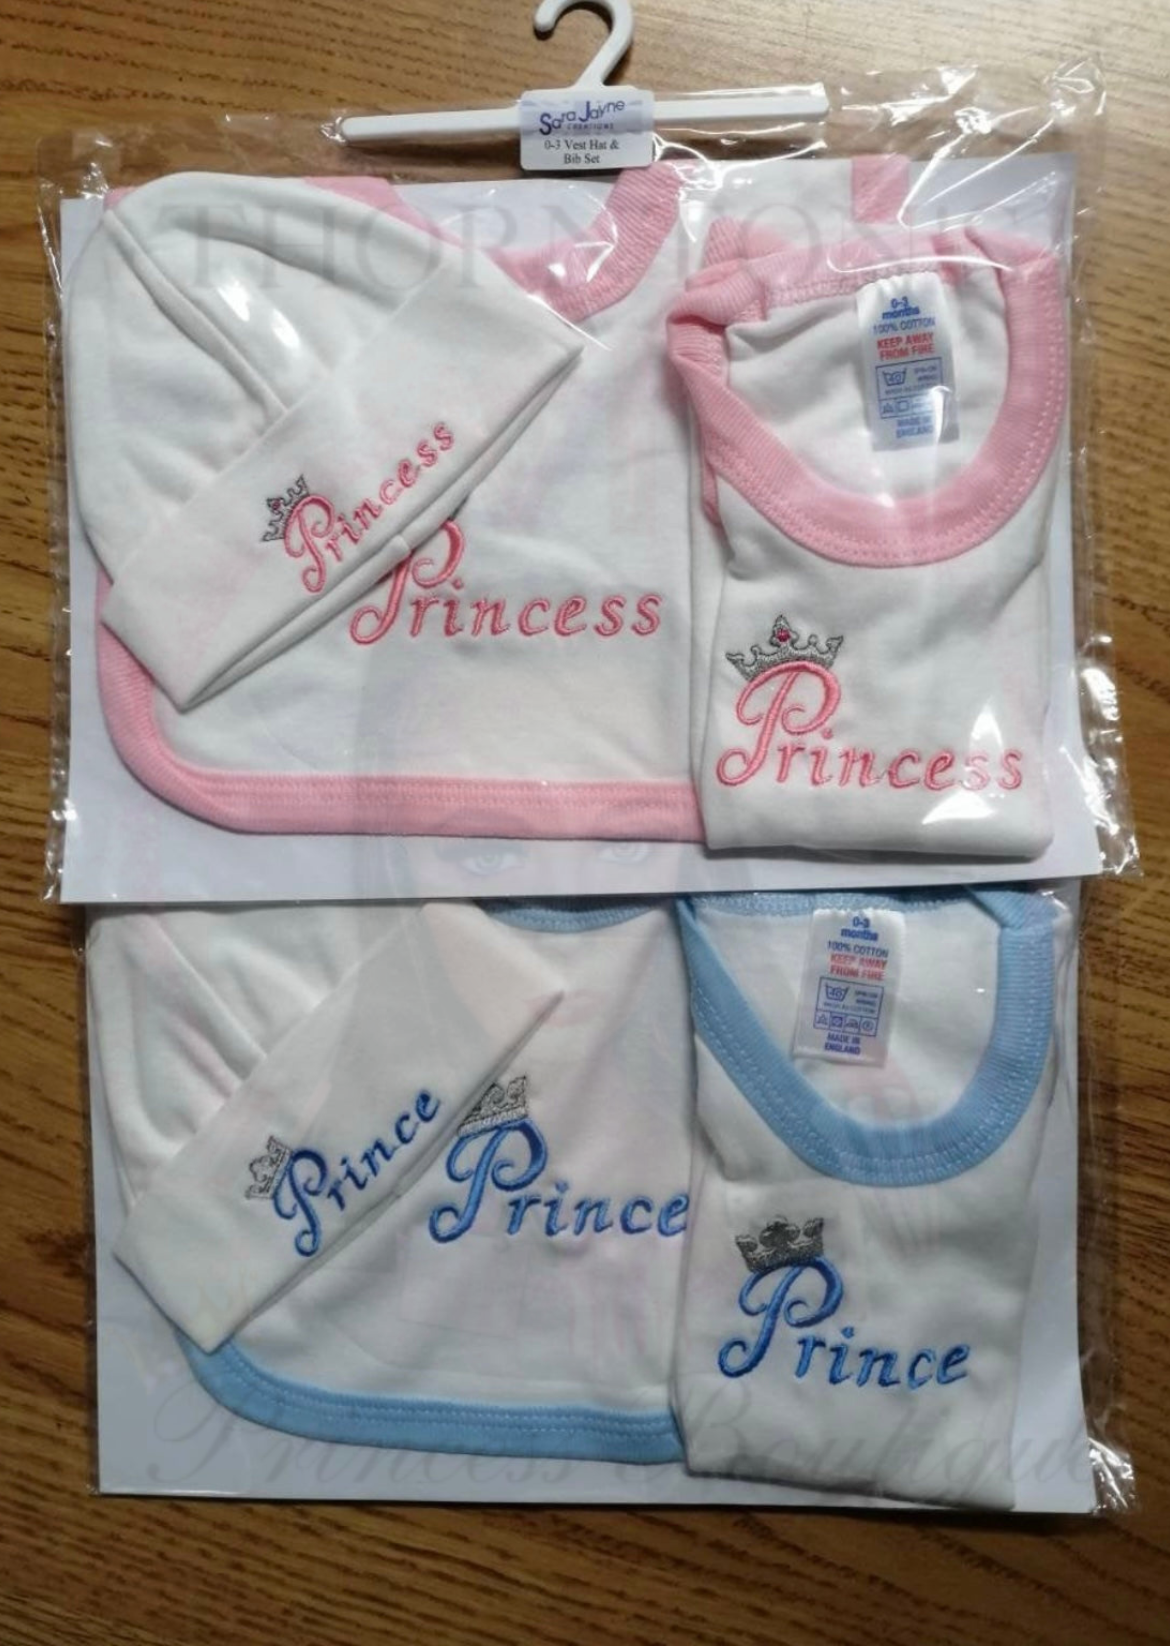 Prince & Princess 3 Piece Baby Gift Set